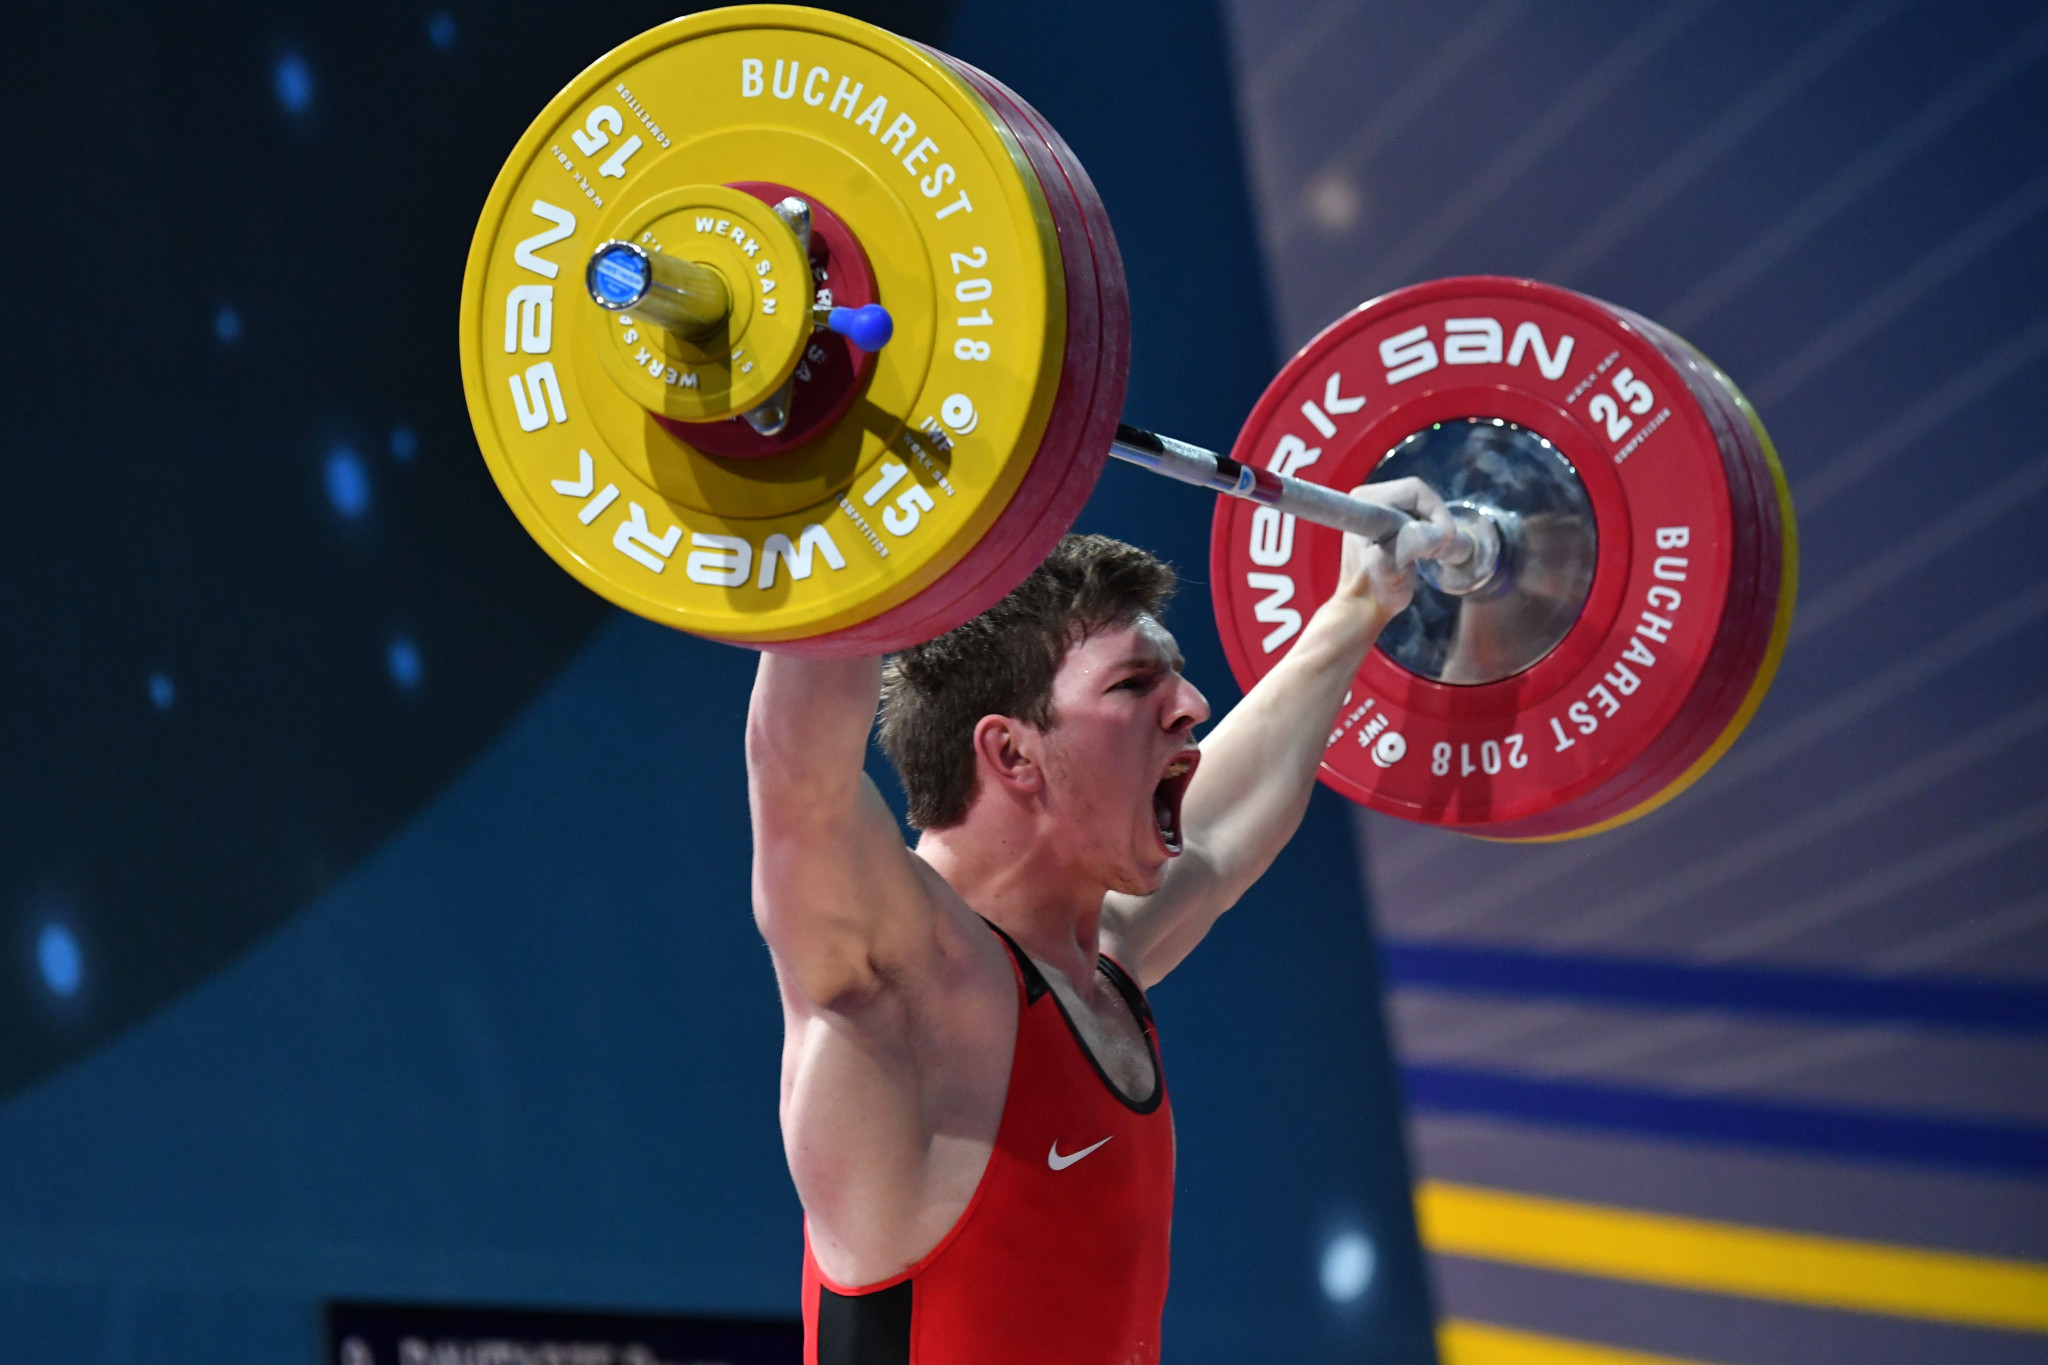 Georgia's Revaz Davitadze topped the men's 85kg podium ©Getty Images